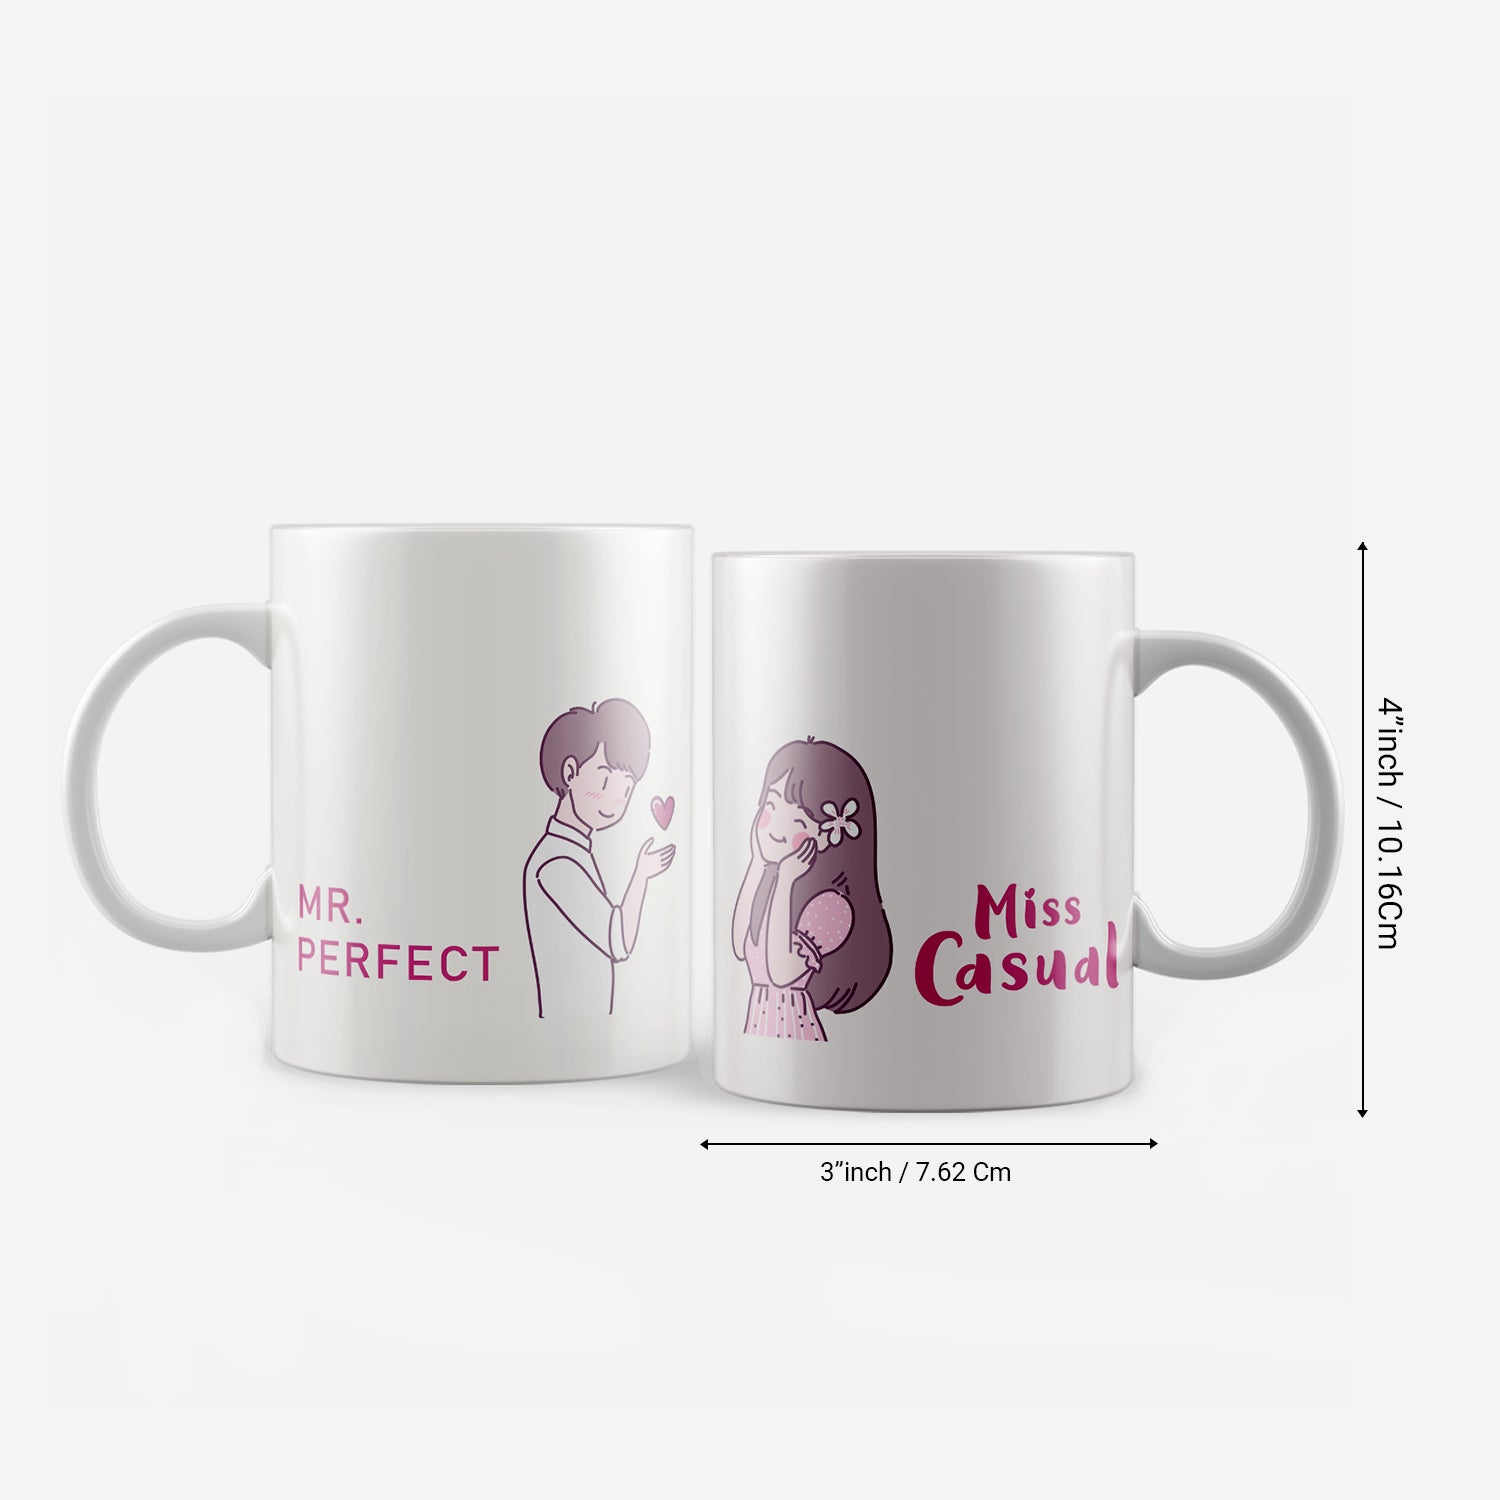 Set Of 2 "Mr. Perfect - Miss Casual" Valentine Love theme Ceramic Coffee Mugs 3